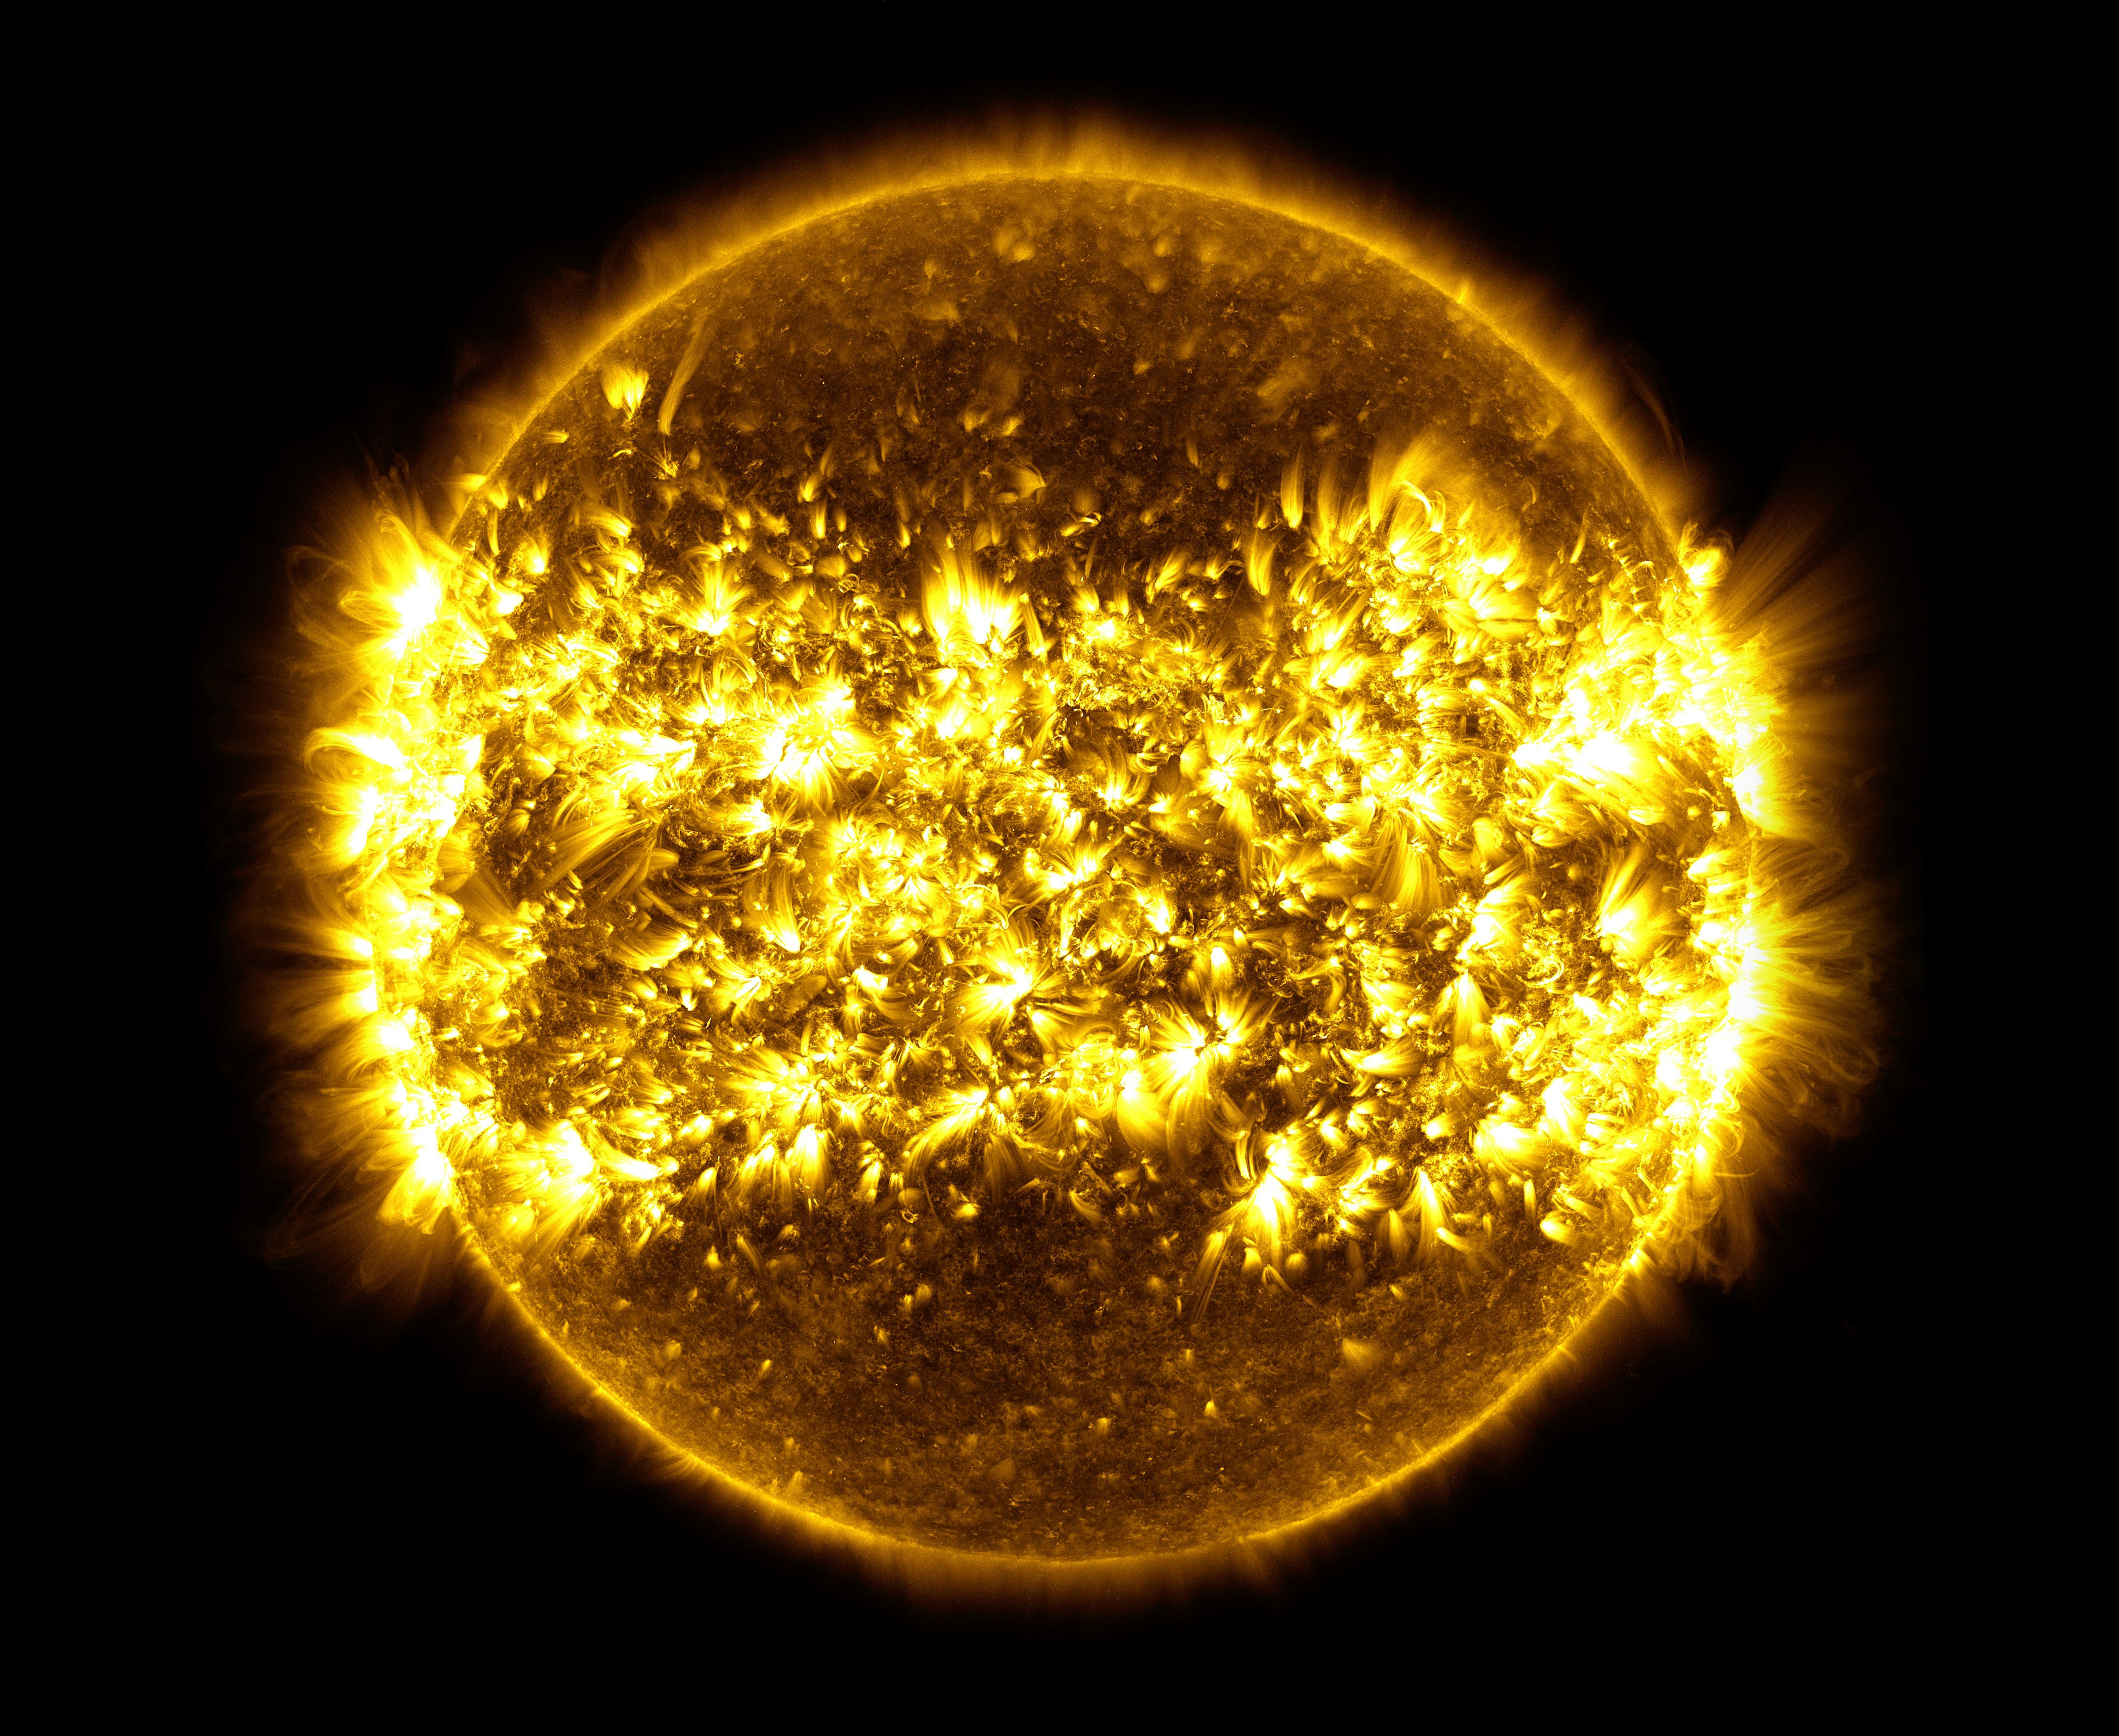 sun corona temperature in kelvin